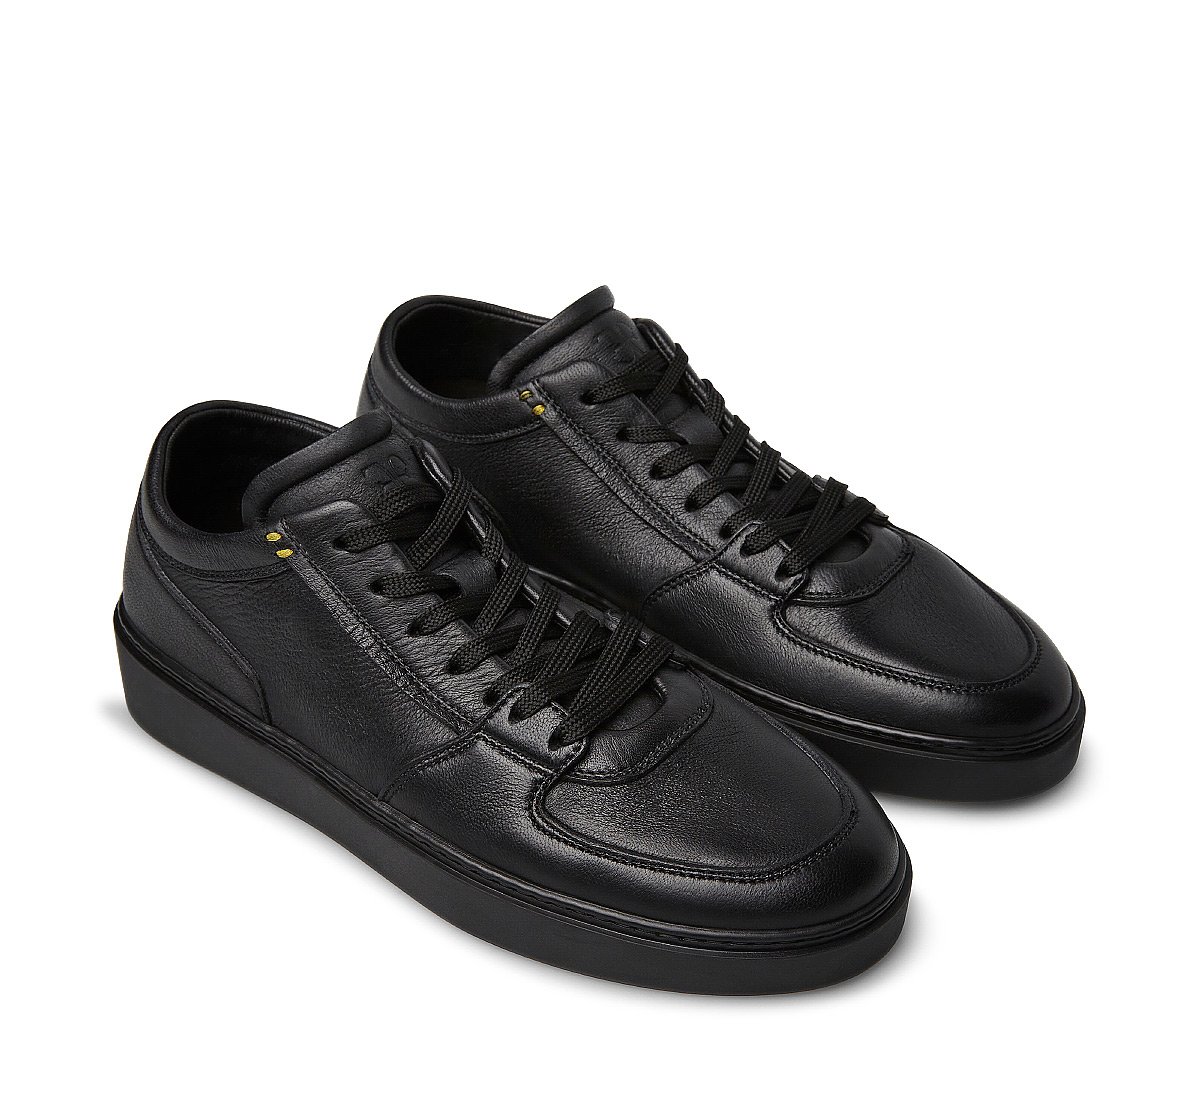 Sneaker in nappa leather